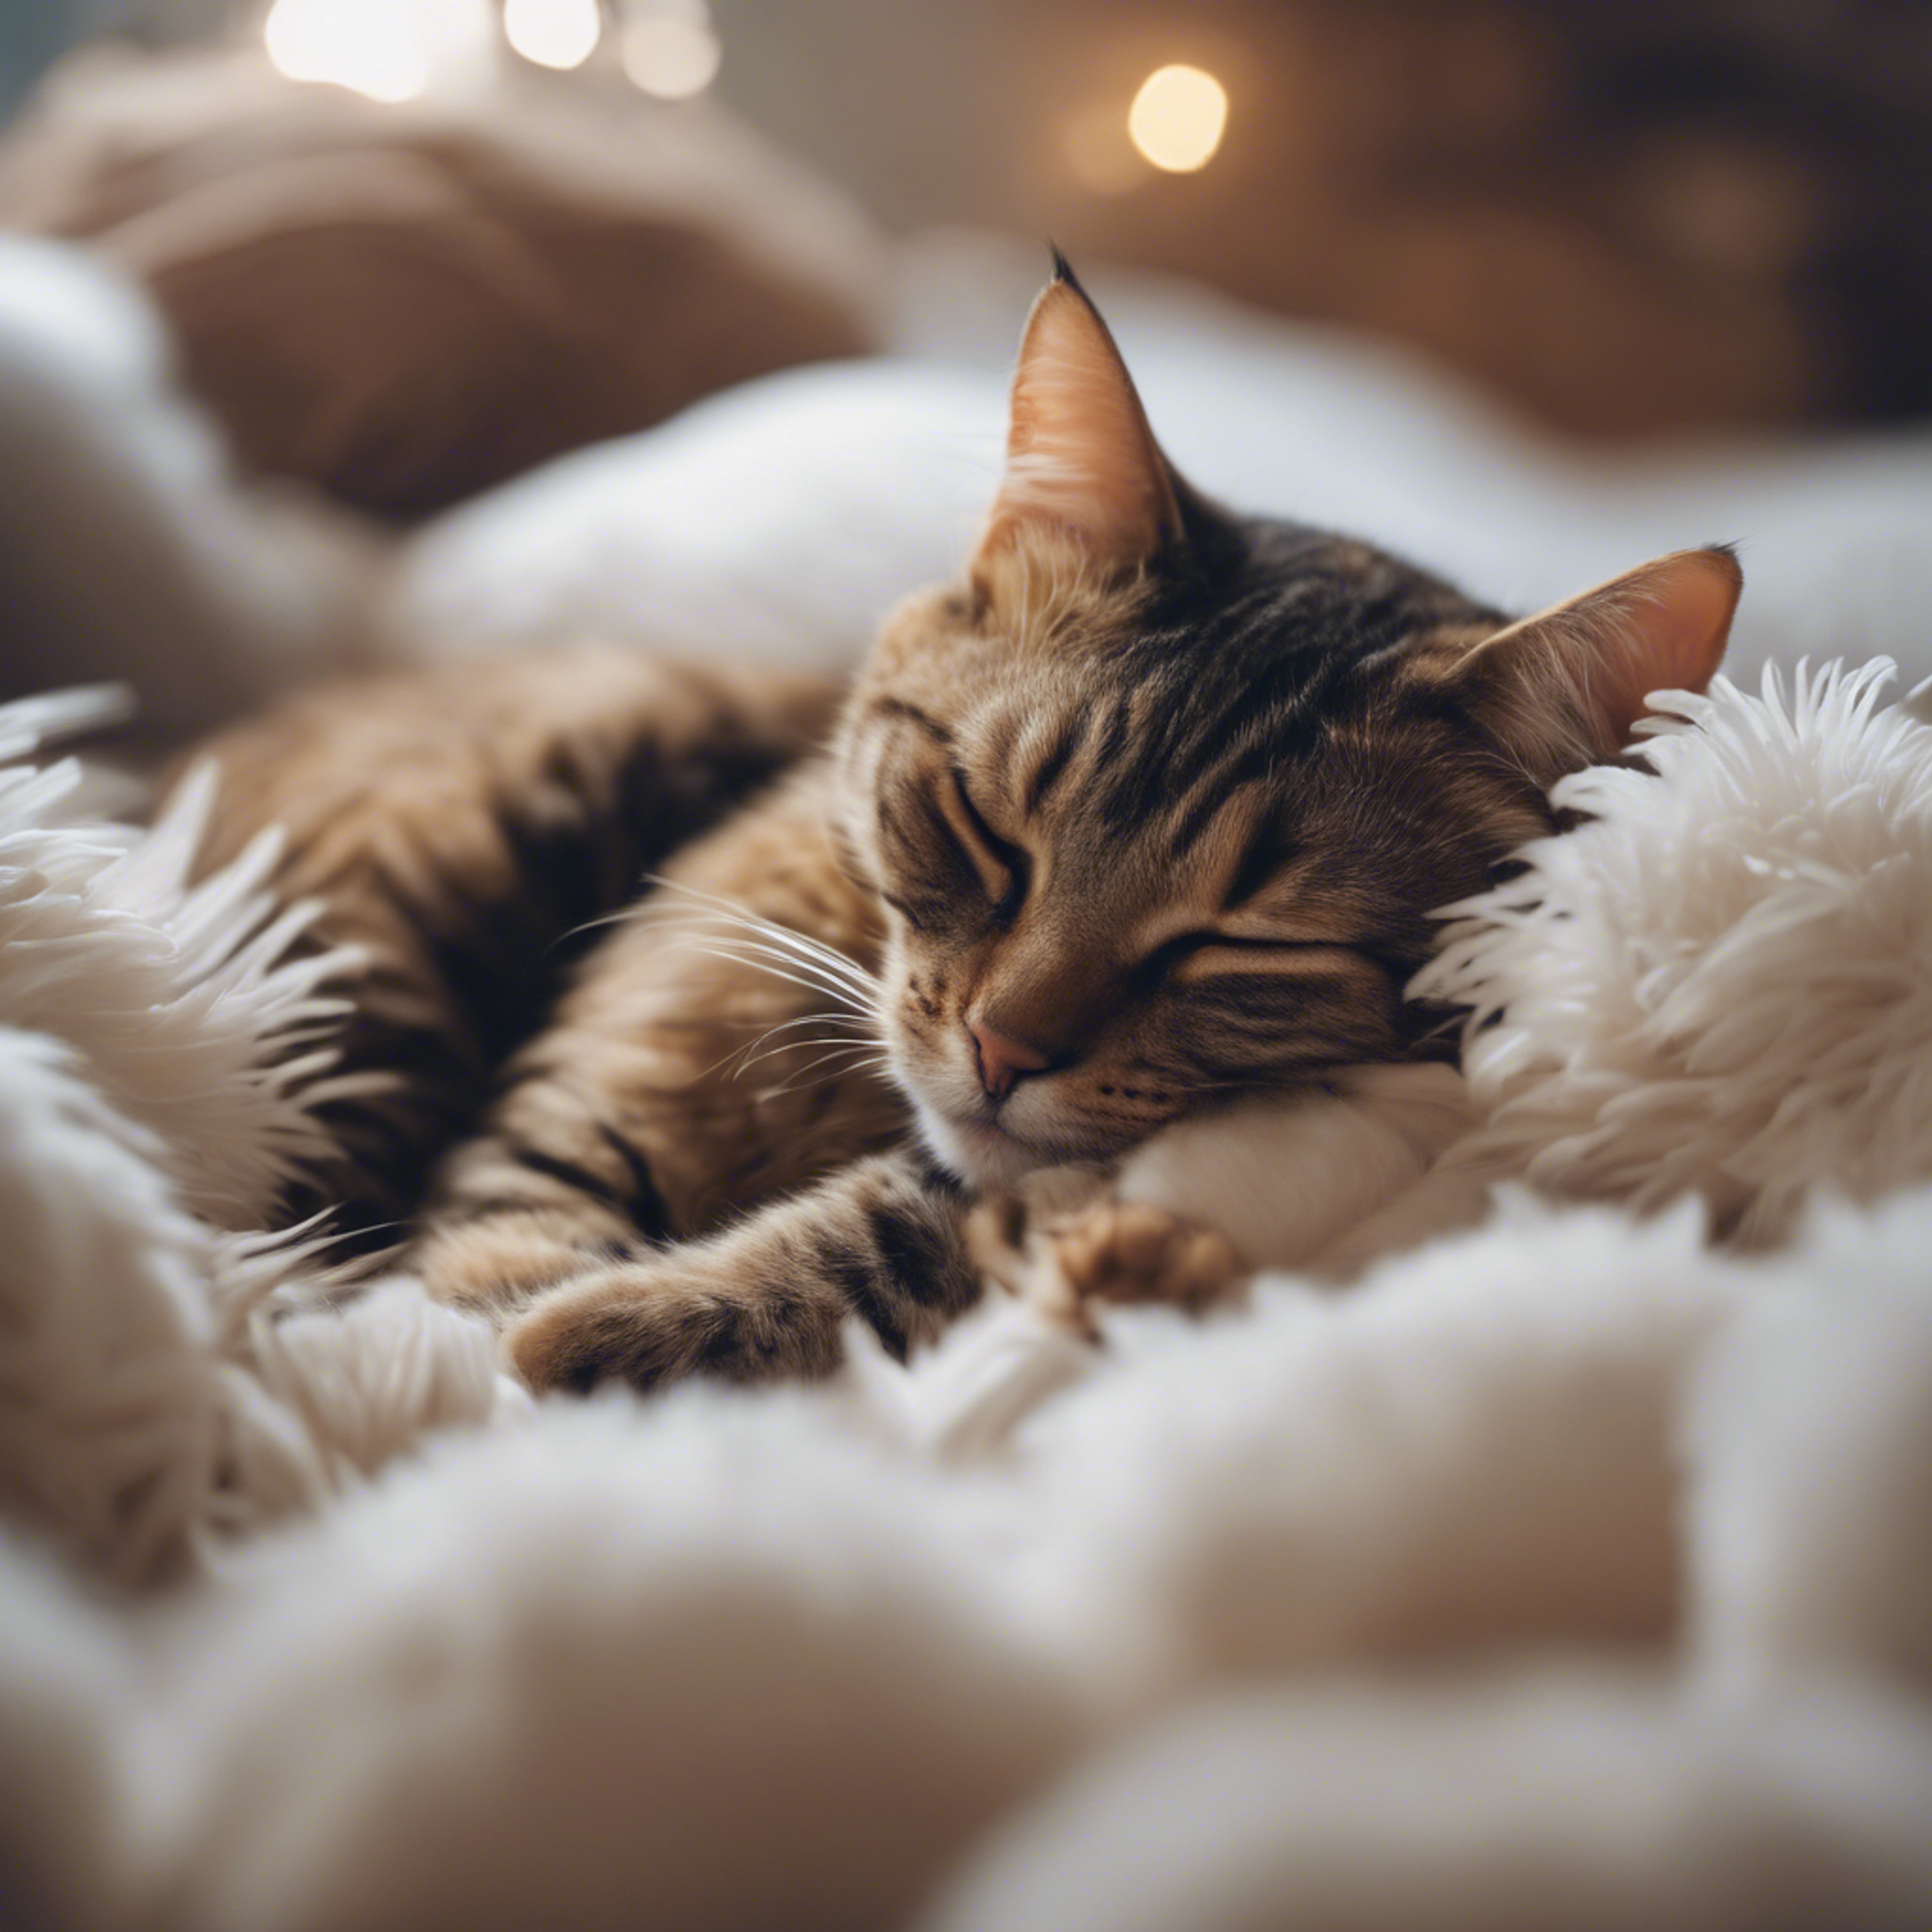 A cat sleeping soundly, completely submerged in a sea of cozy, fluffy pillows. Papel de parede[9e78fe4df88a4e90bb06]